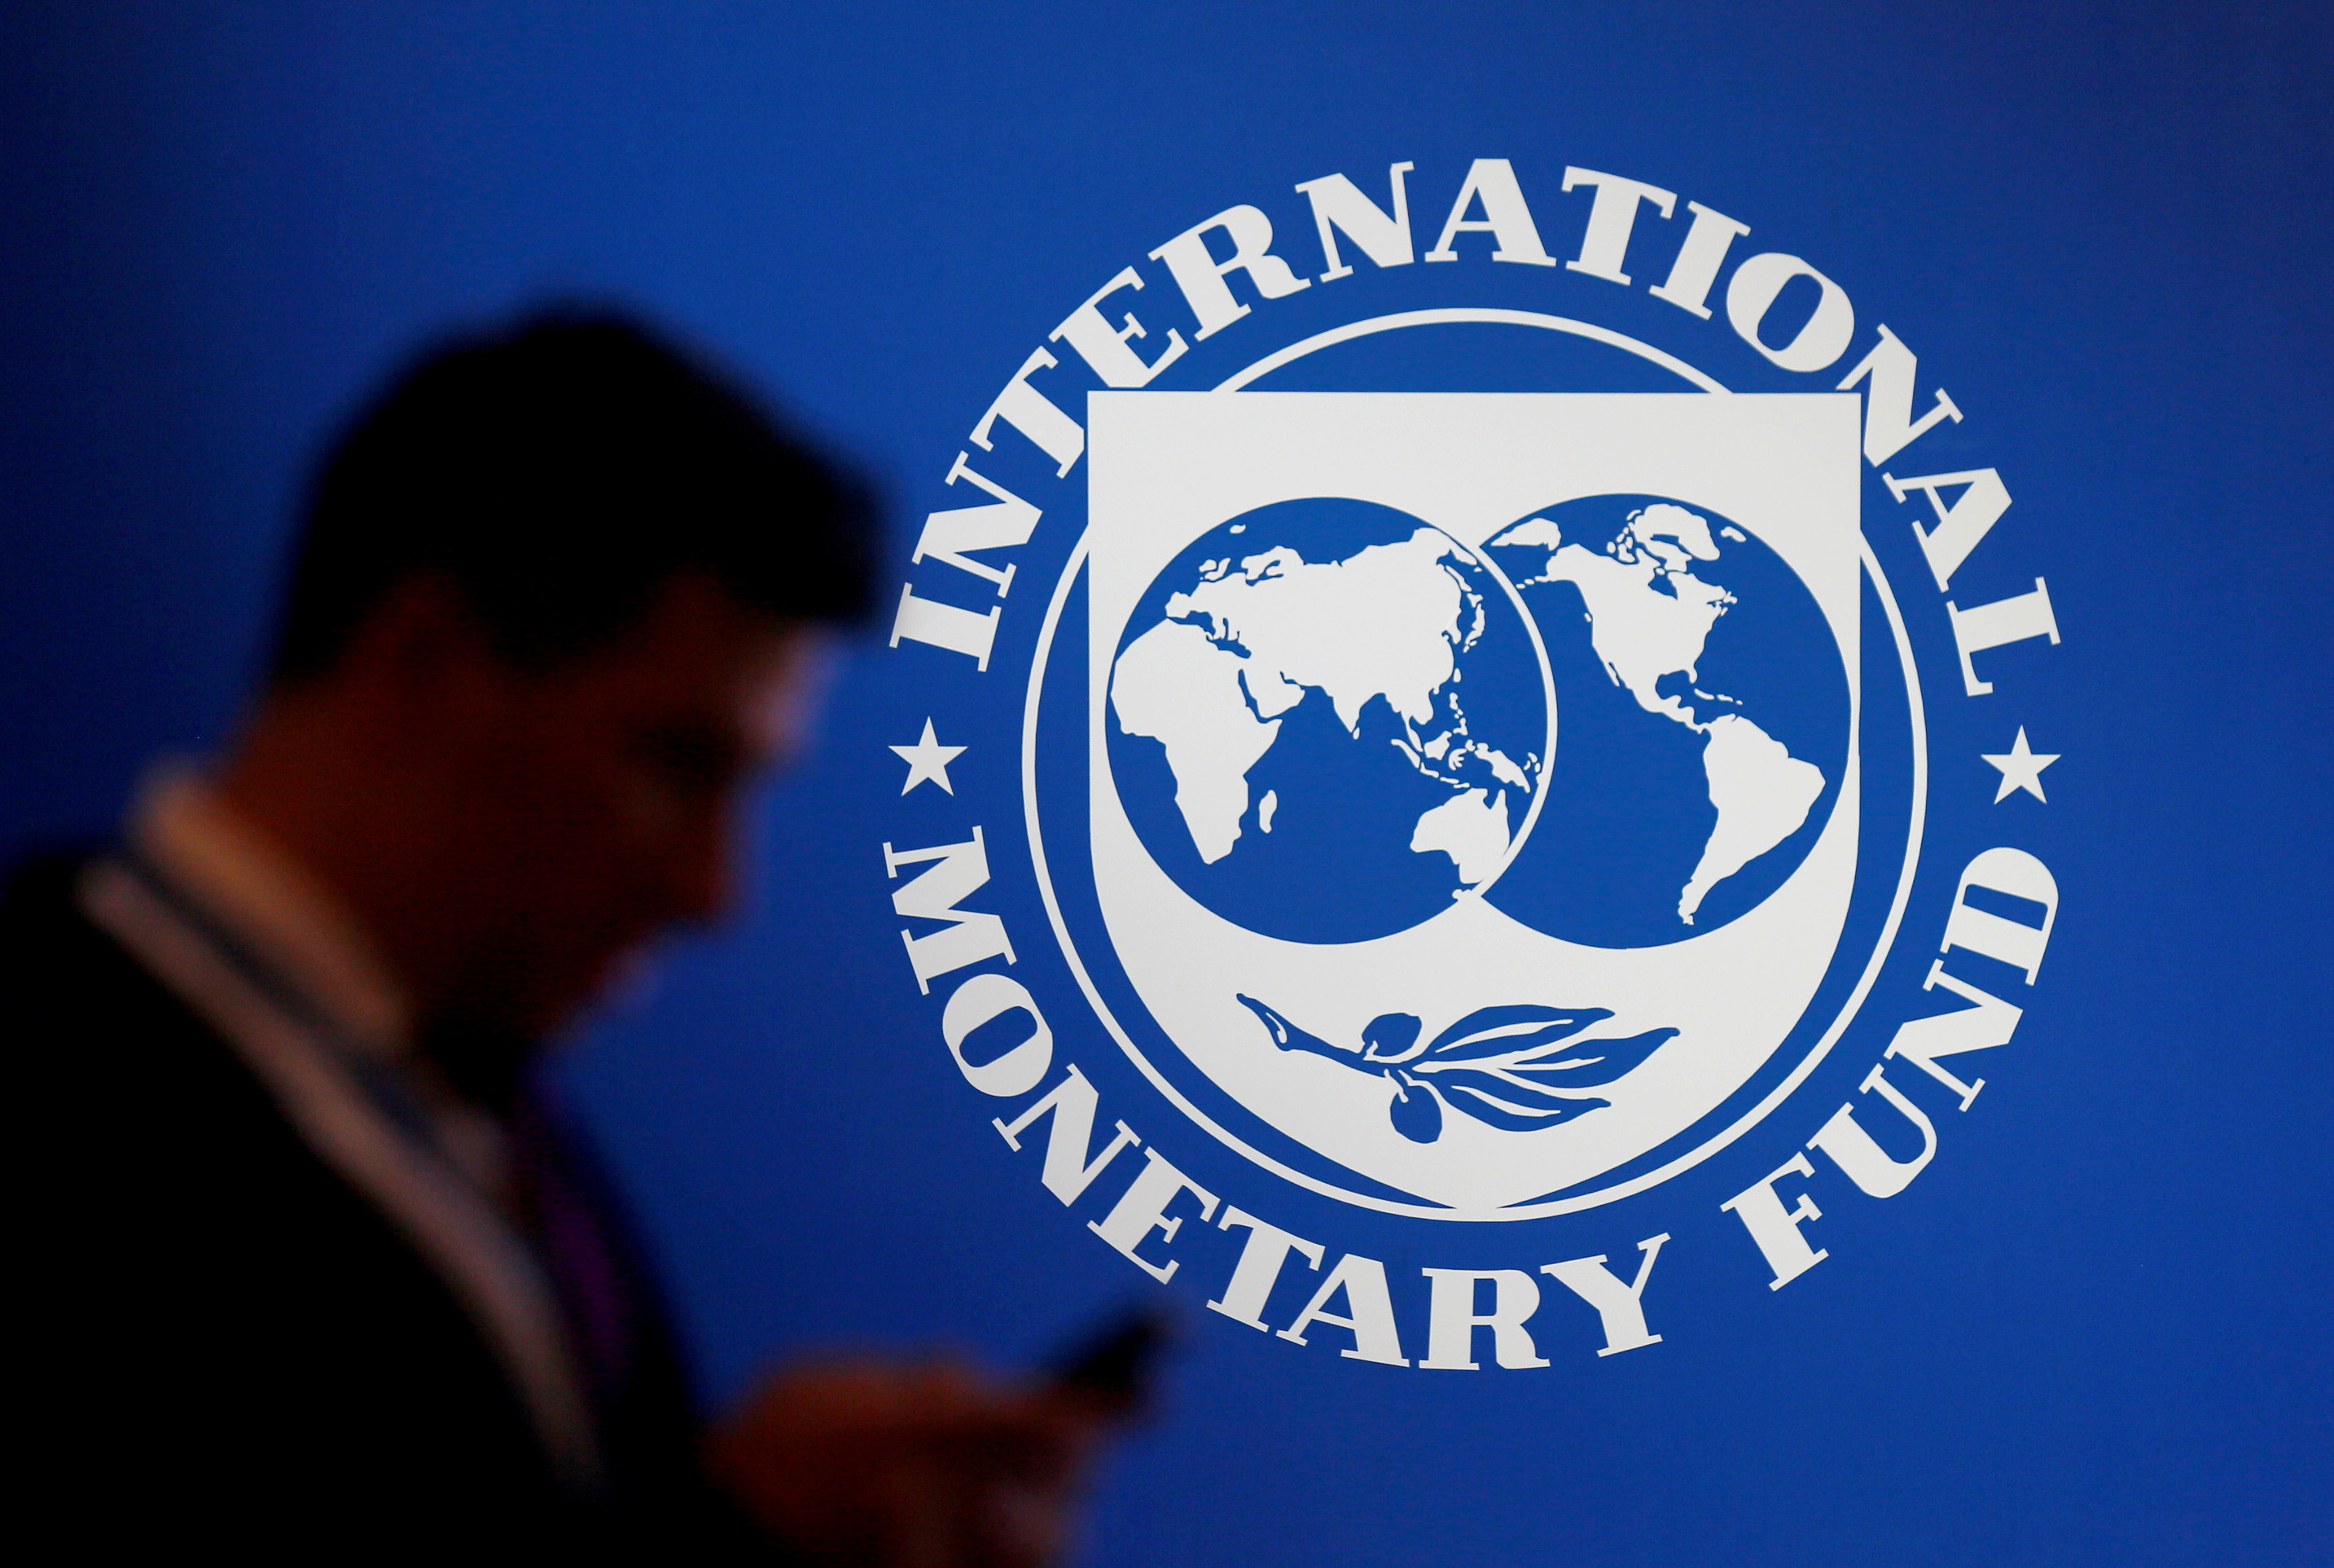 IMF, imf, İnternational Monetary Funf, imf logo